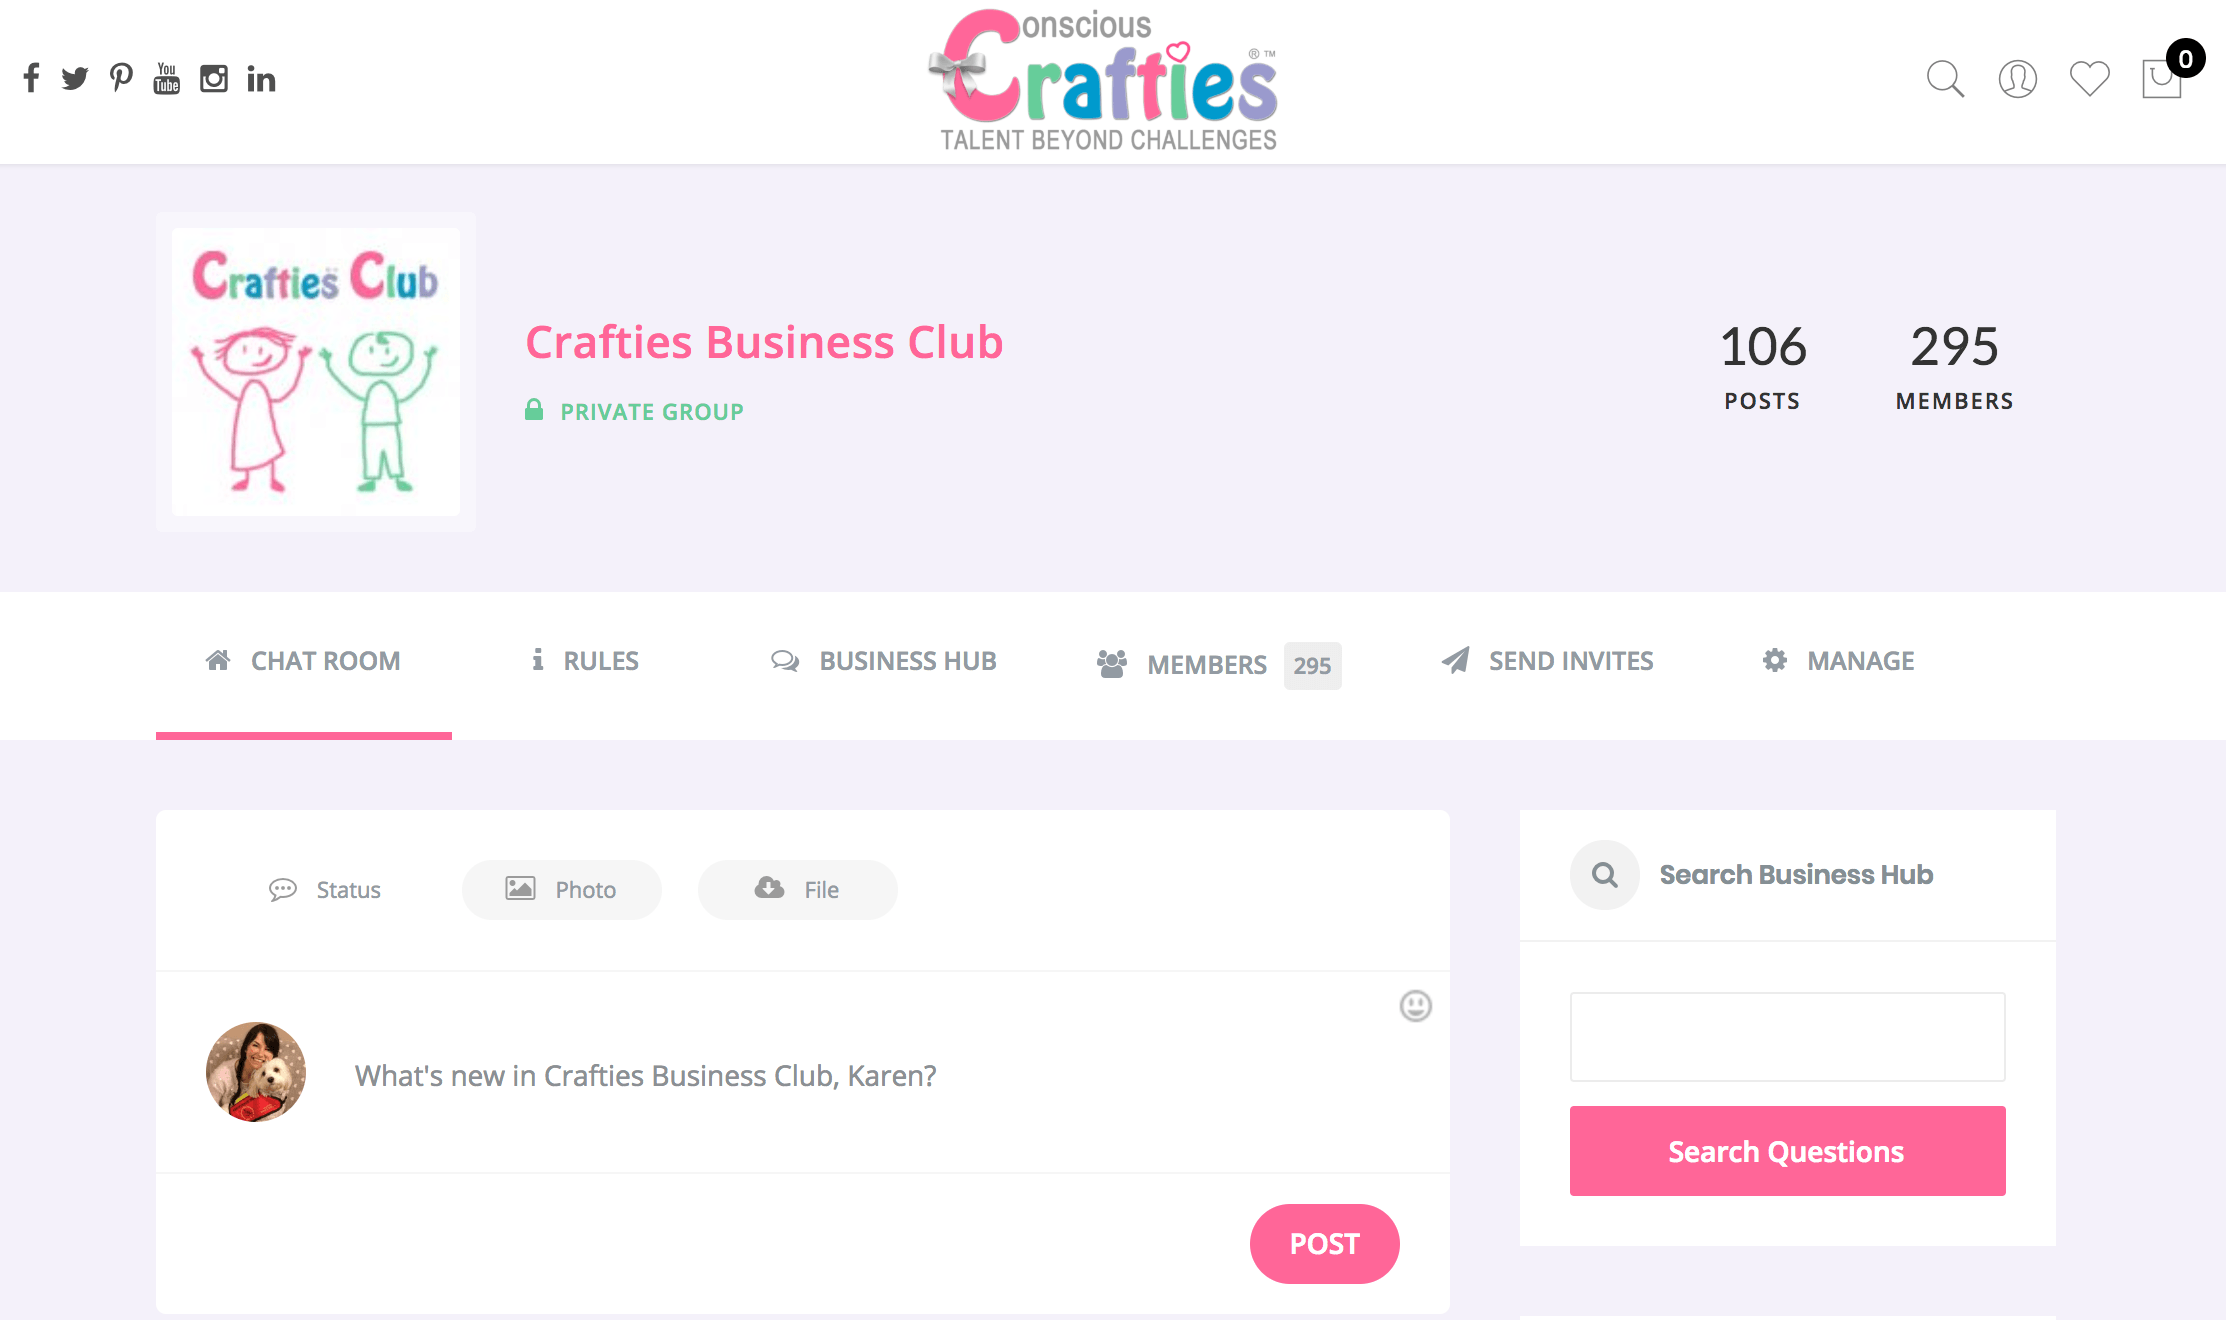 Crafties Business Club